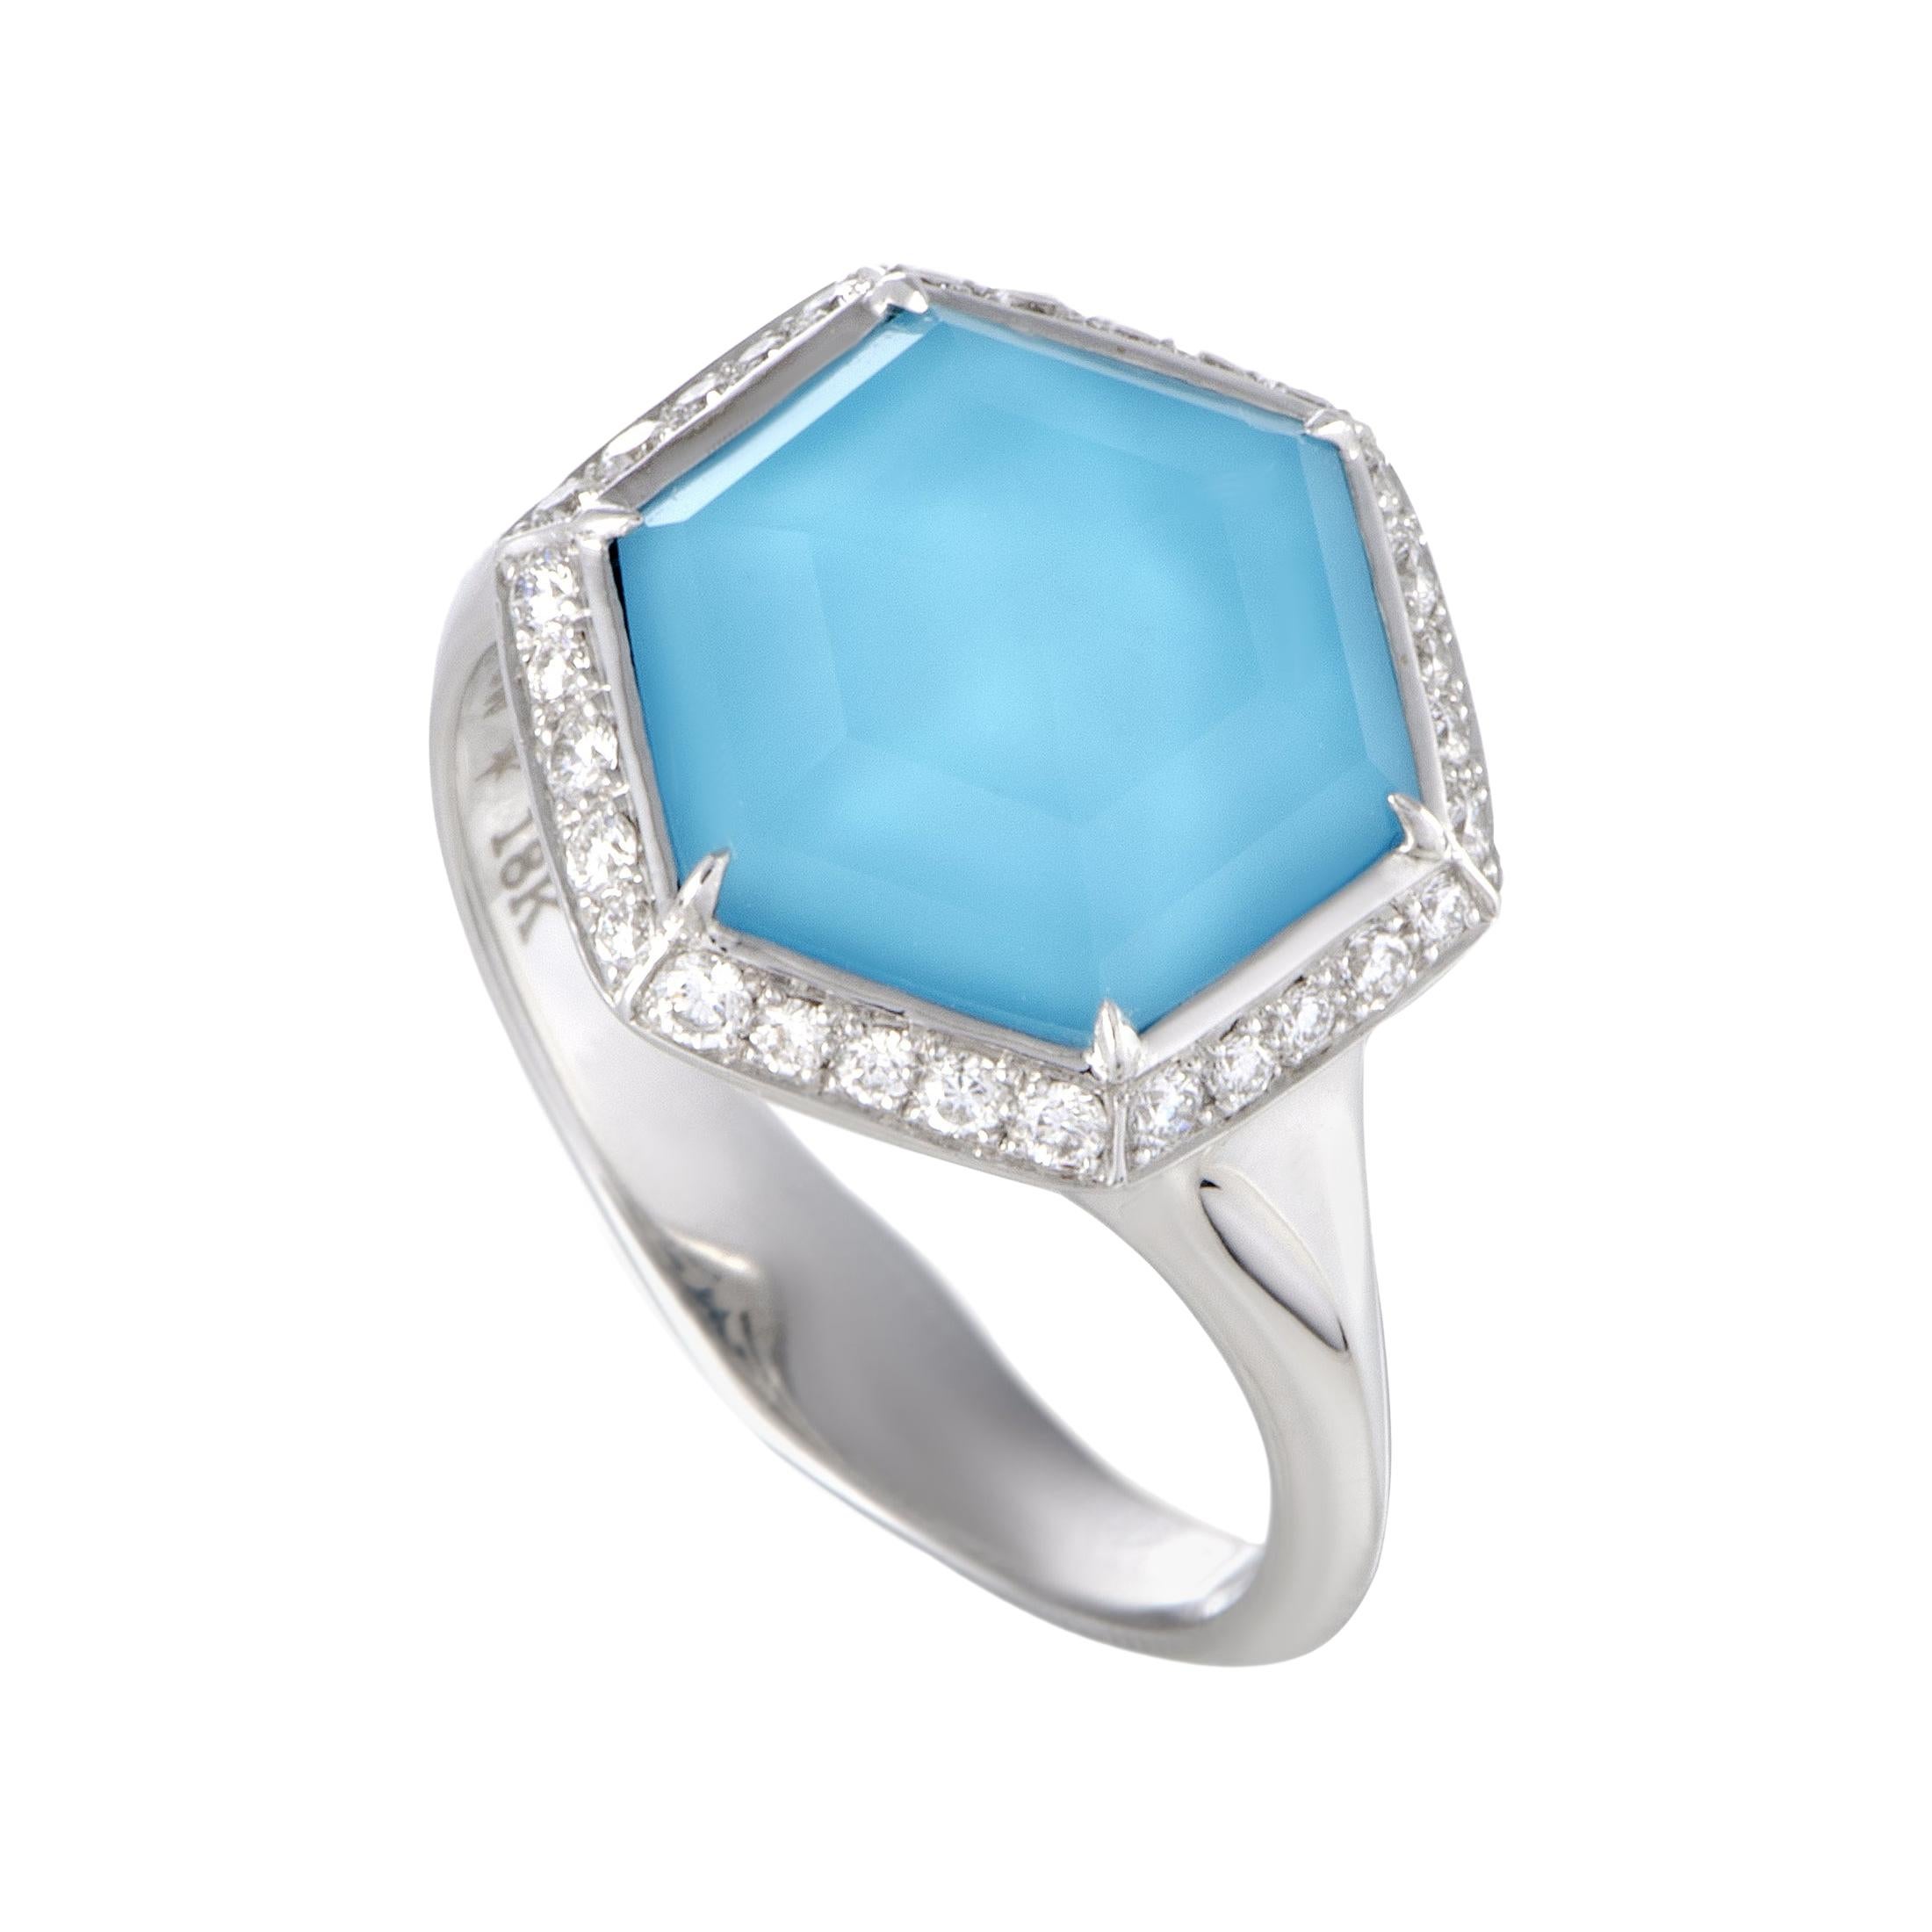 Stephen Webster Deco 18 Karat Gold Diamond Turquoise and Quartz Hexagonal Ring